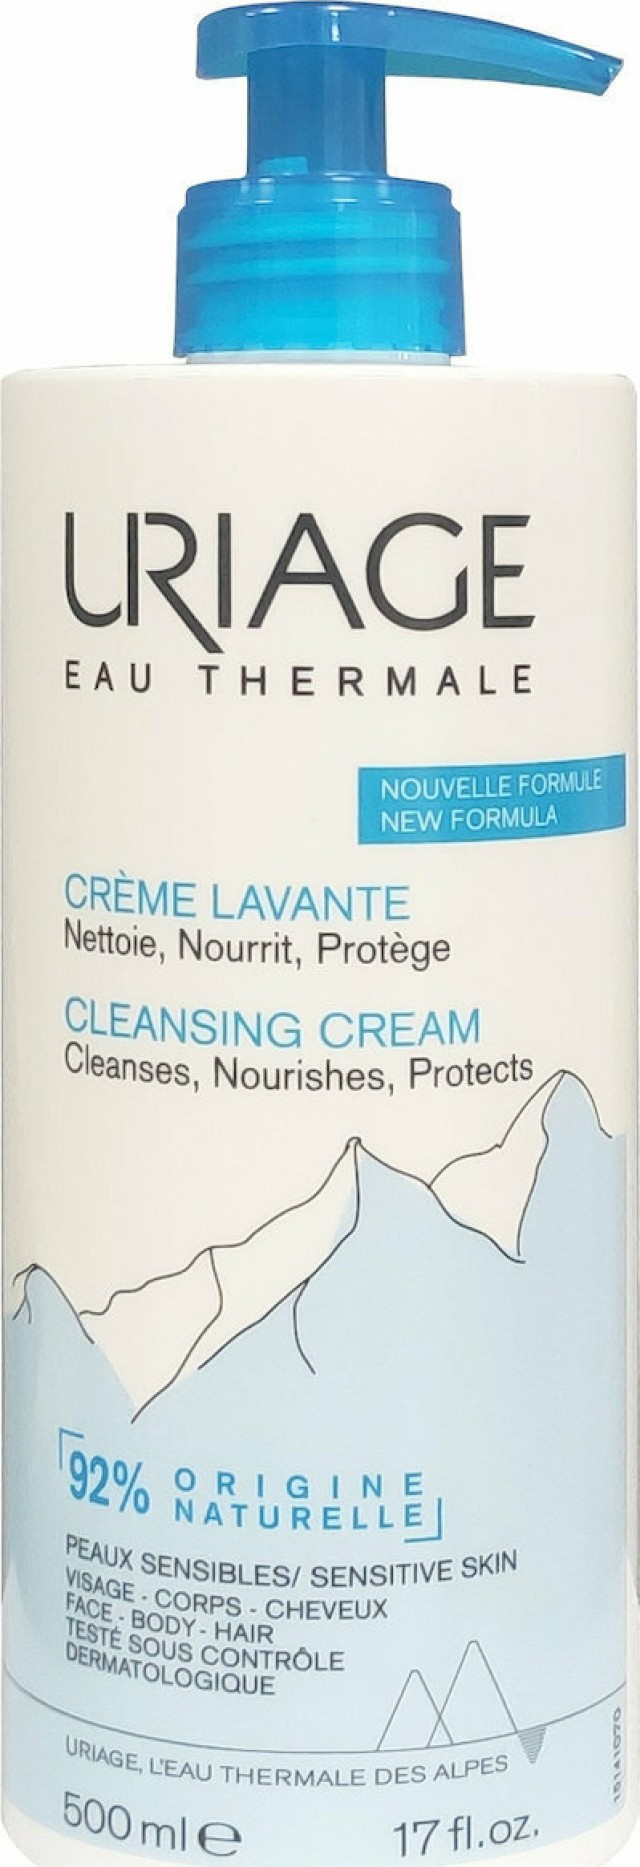 Uriage Eau Thermale Cleansing Cream Κρέμα Καθαρισμού 500ml